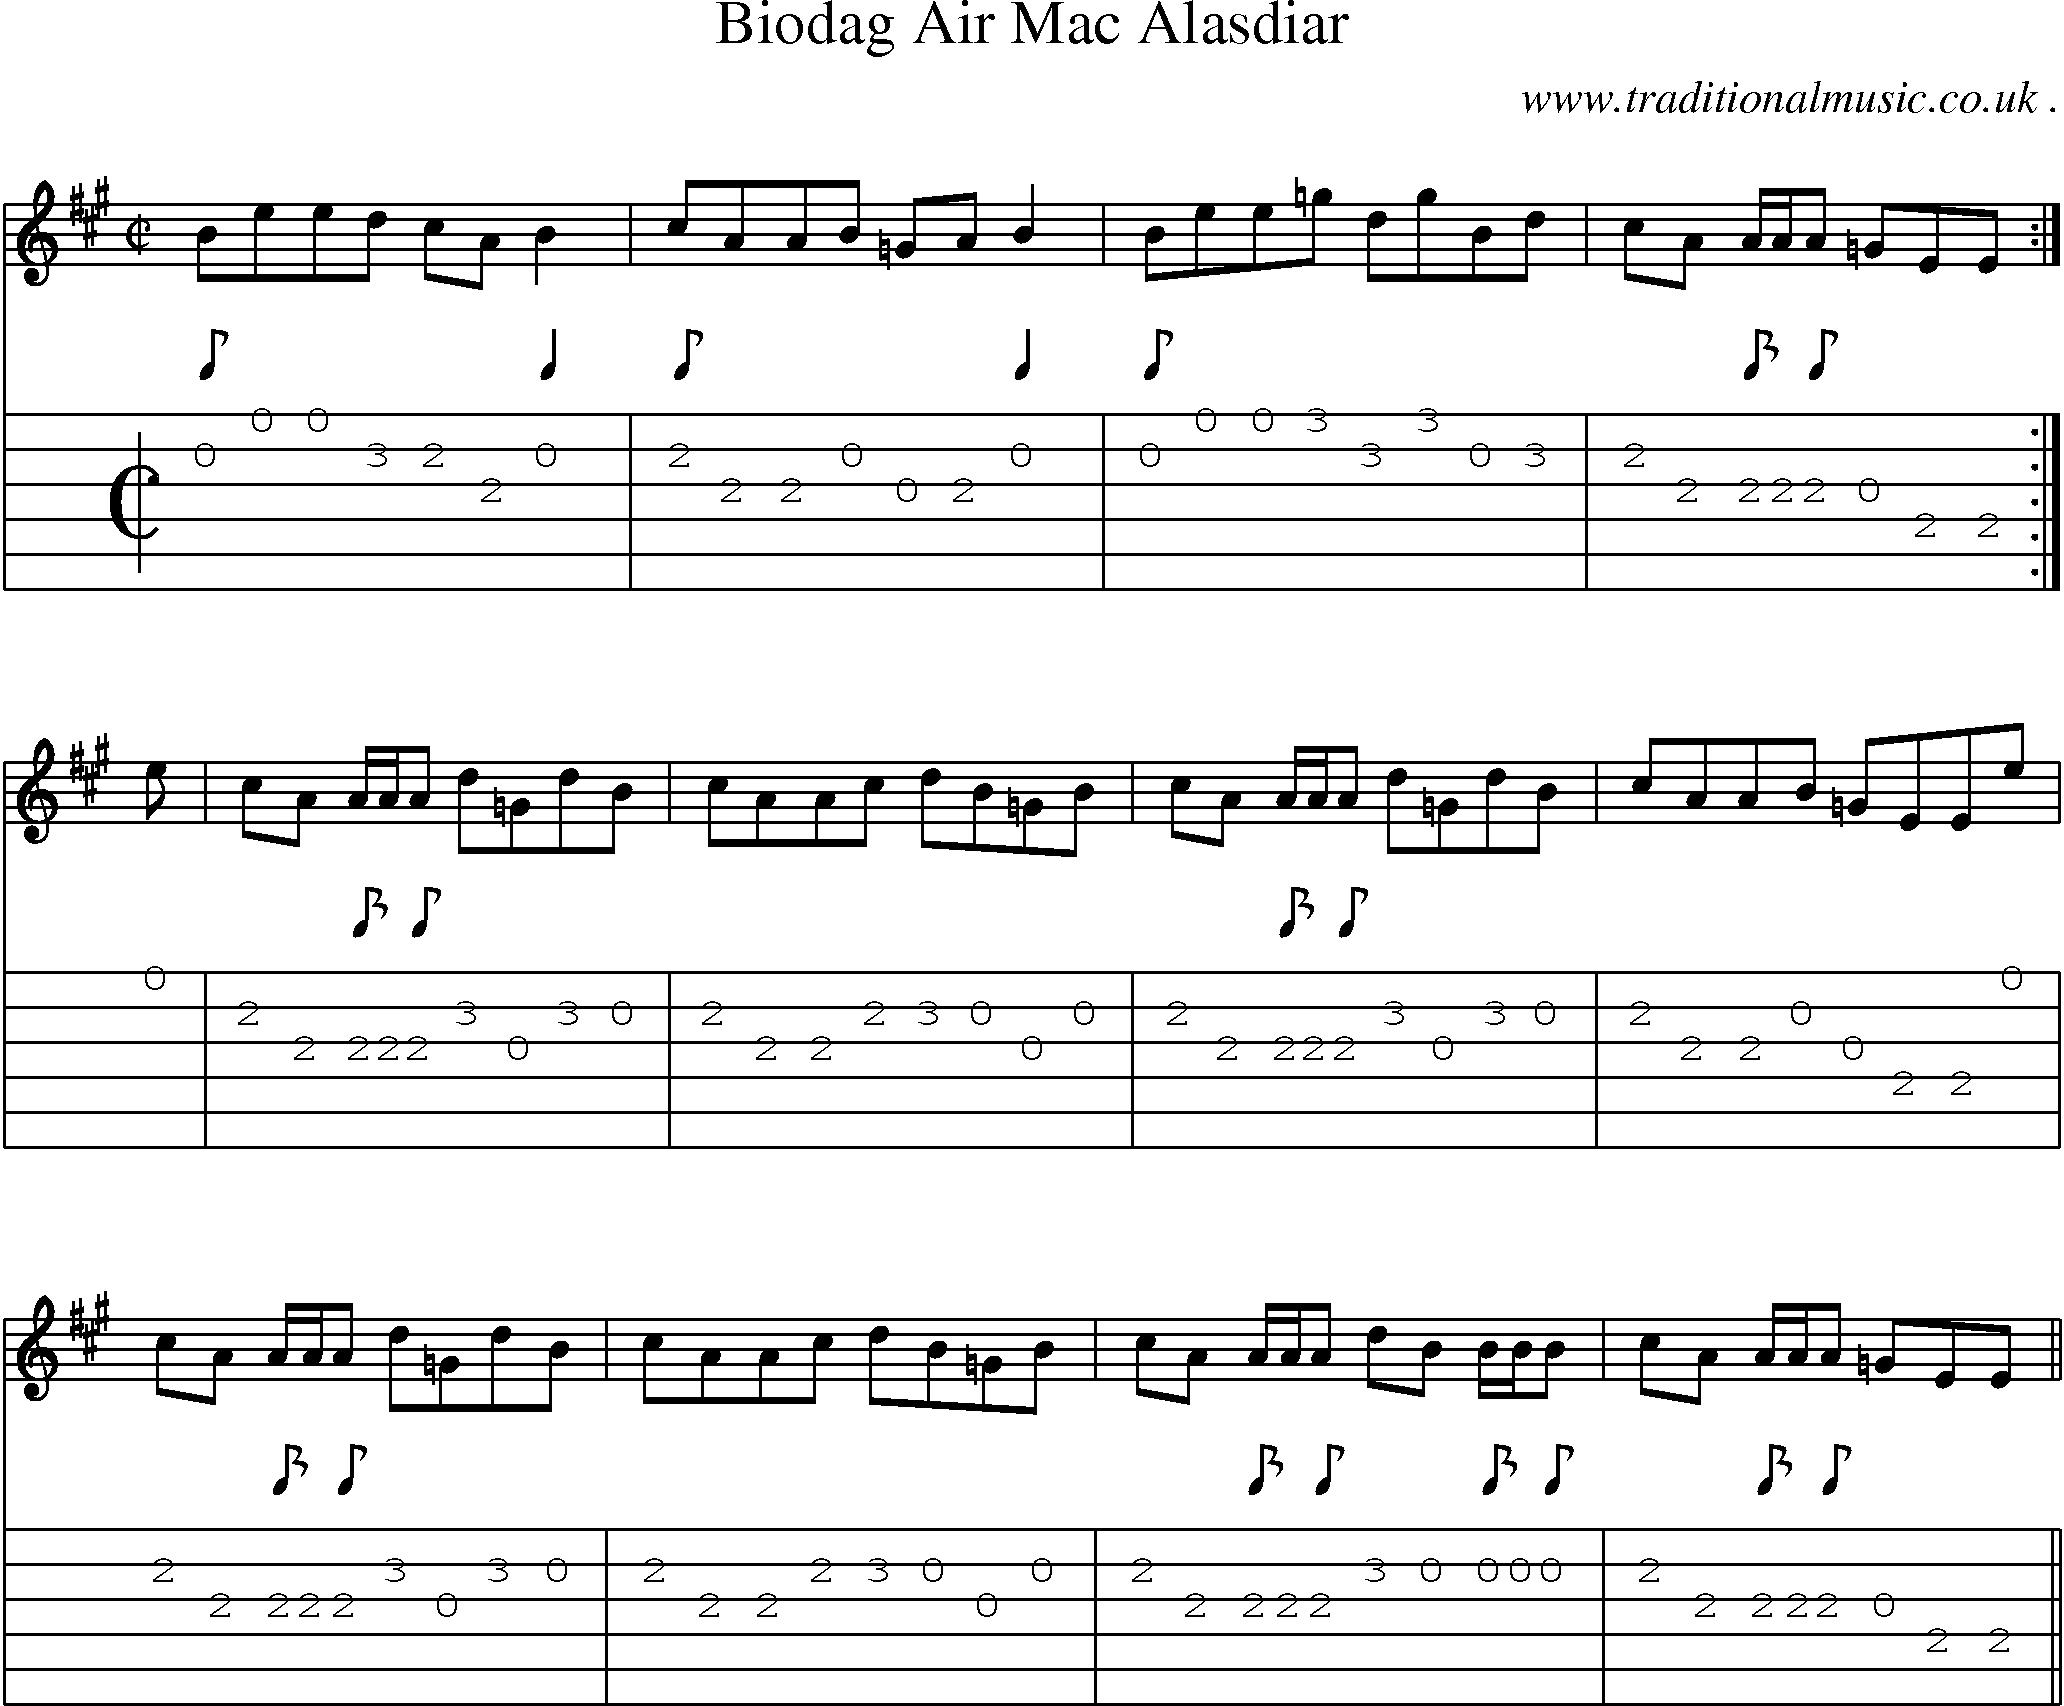 Sheet-music  score, Chords and Guitar Tabs for Biodag Air Mac Alasdiar